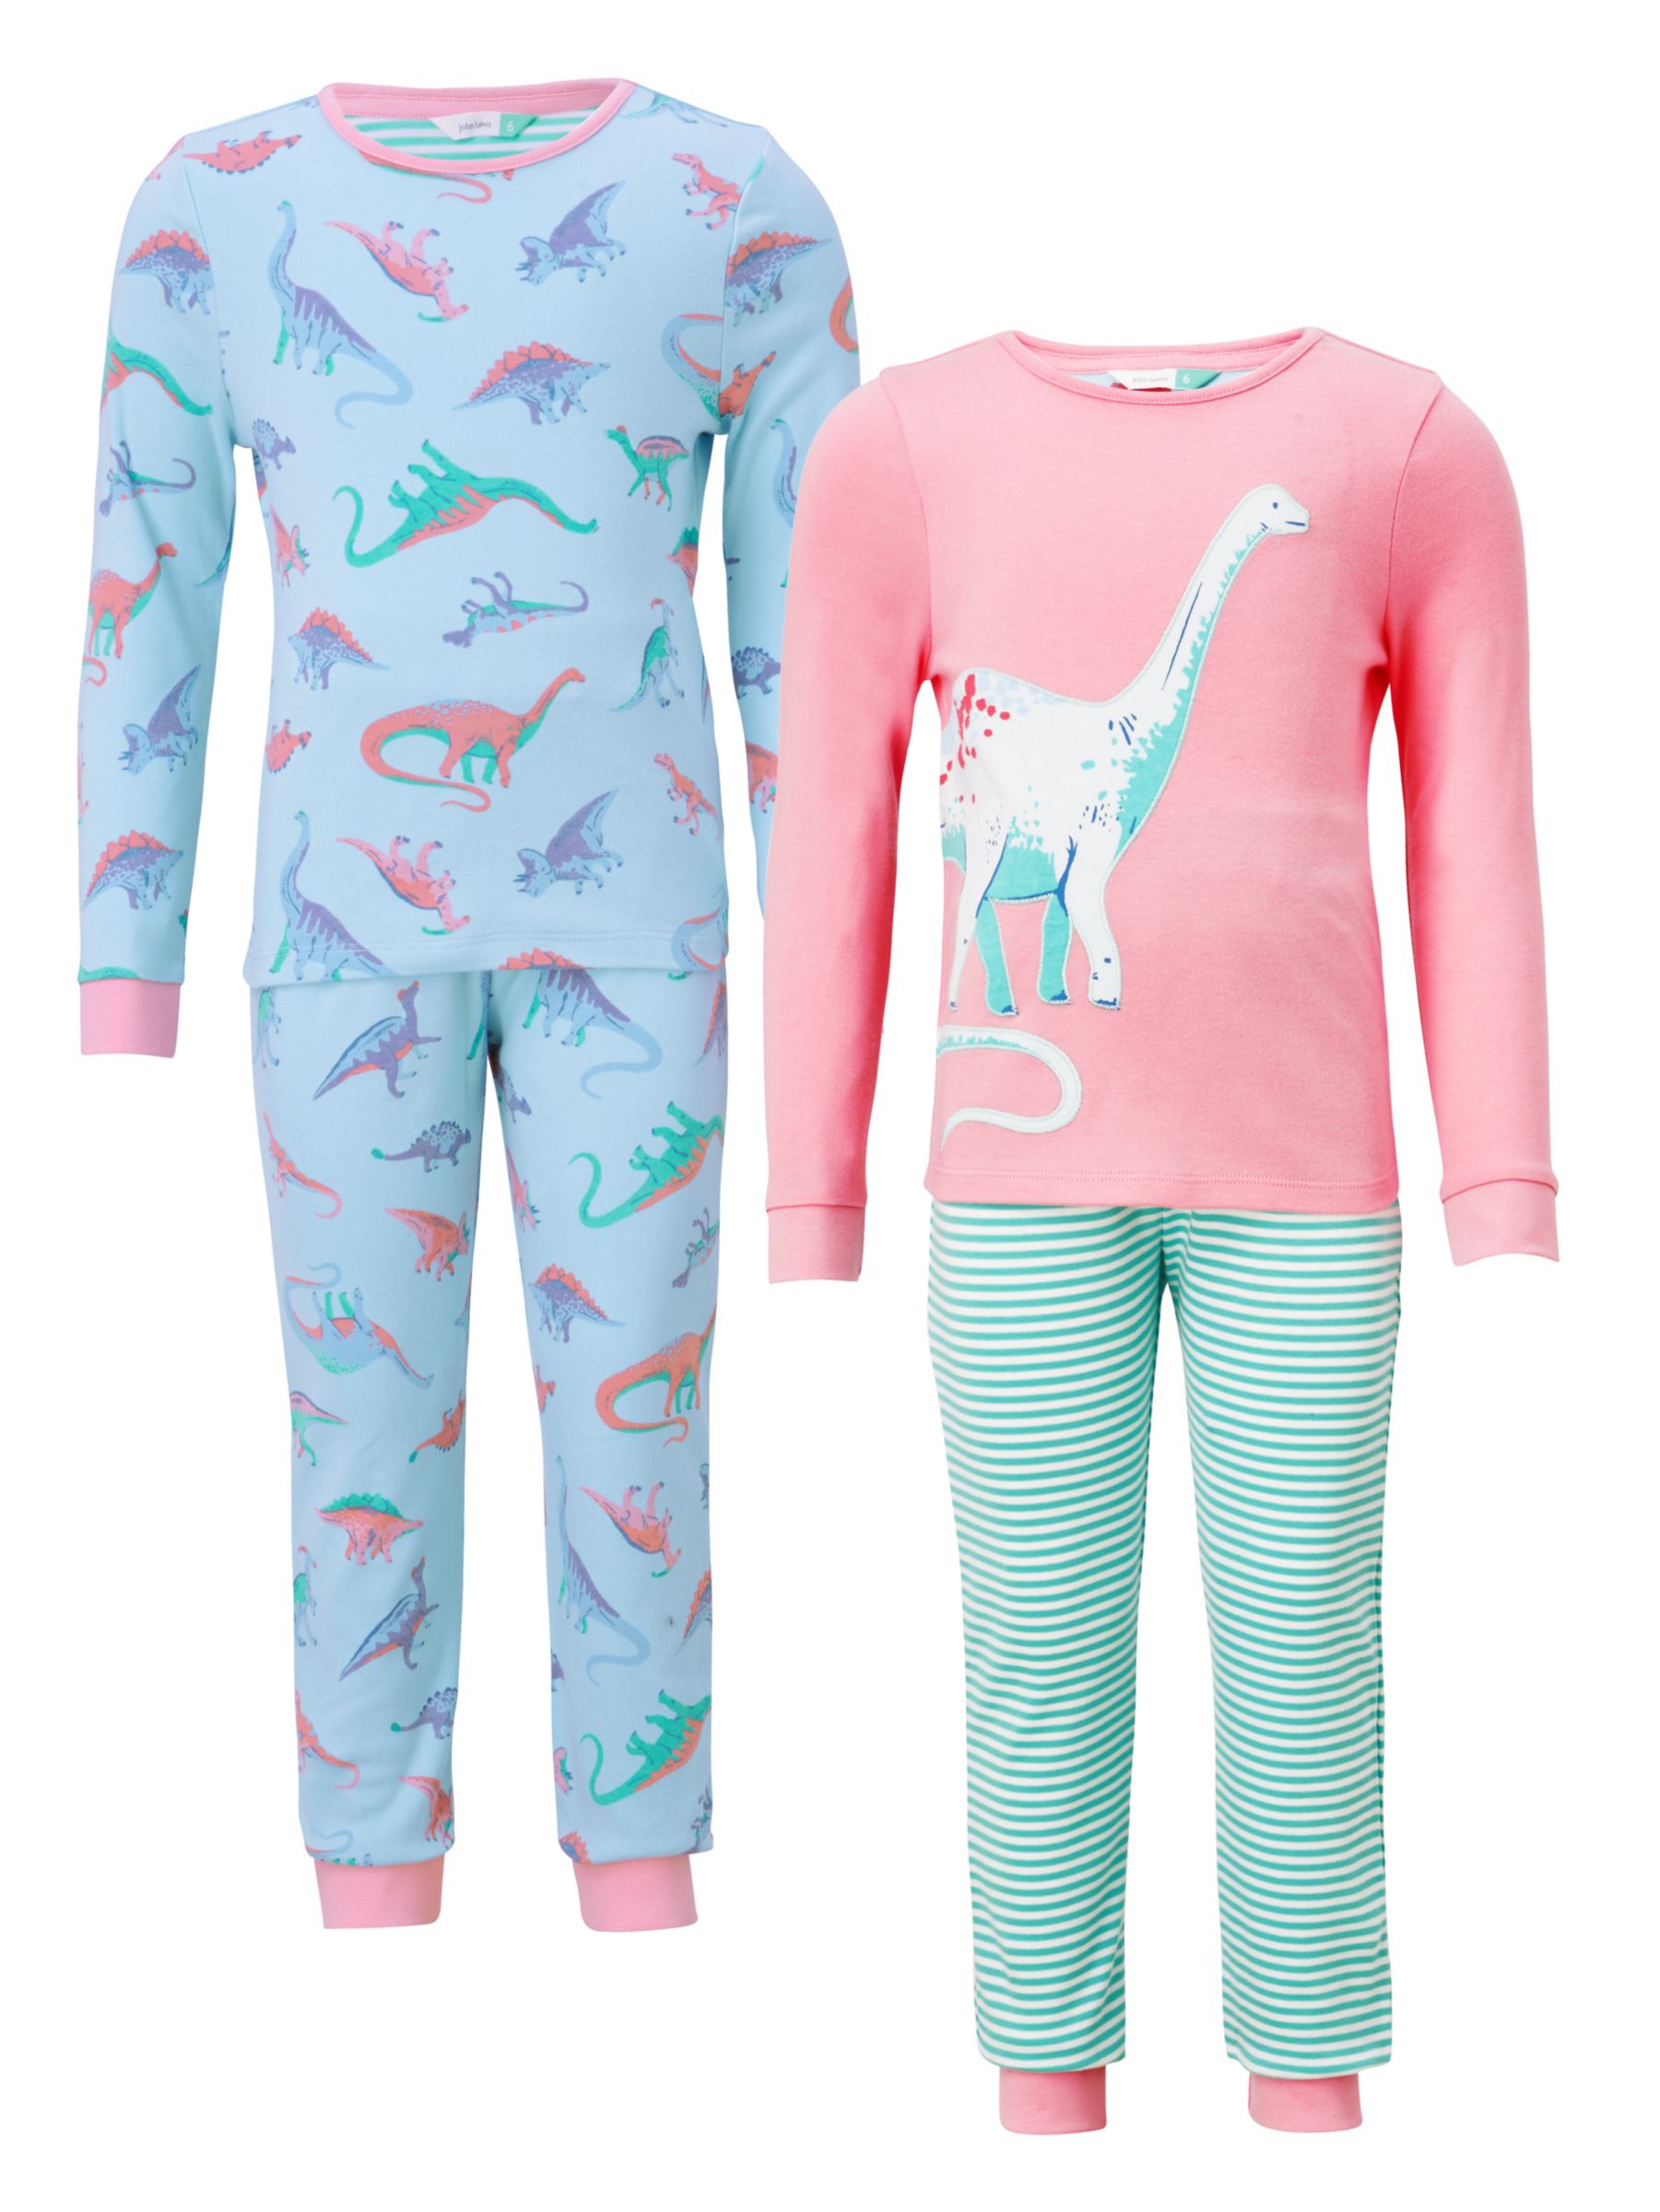 John Lewis & Partners Children's Dinosaur Print Pyjamas, Pack of 2, Multi